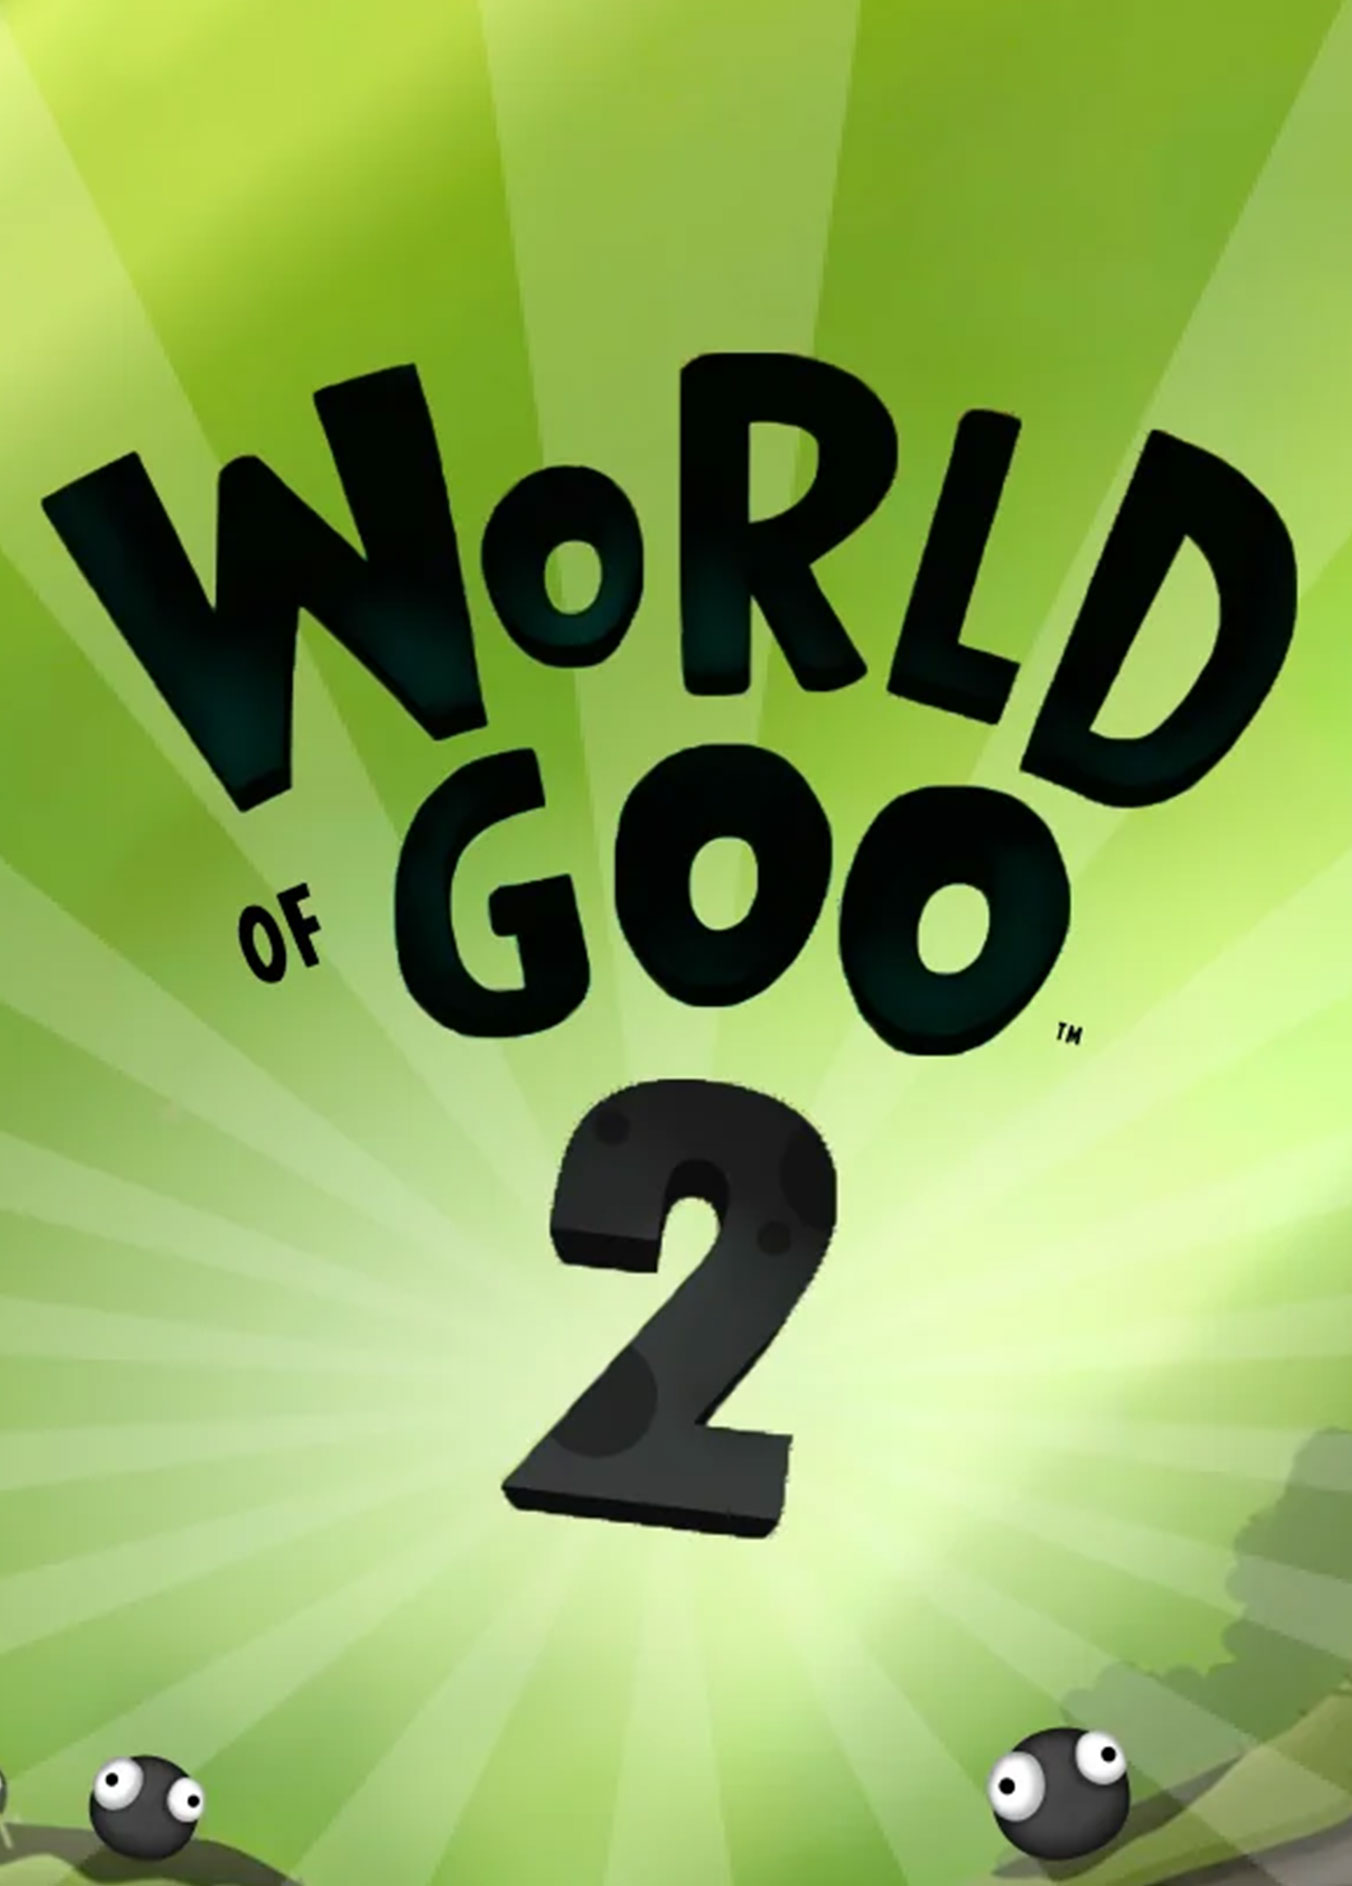 world-of-goo